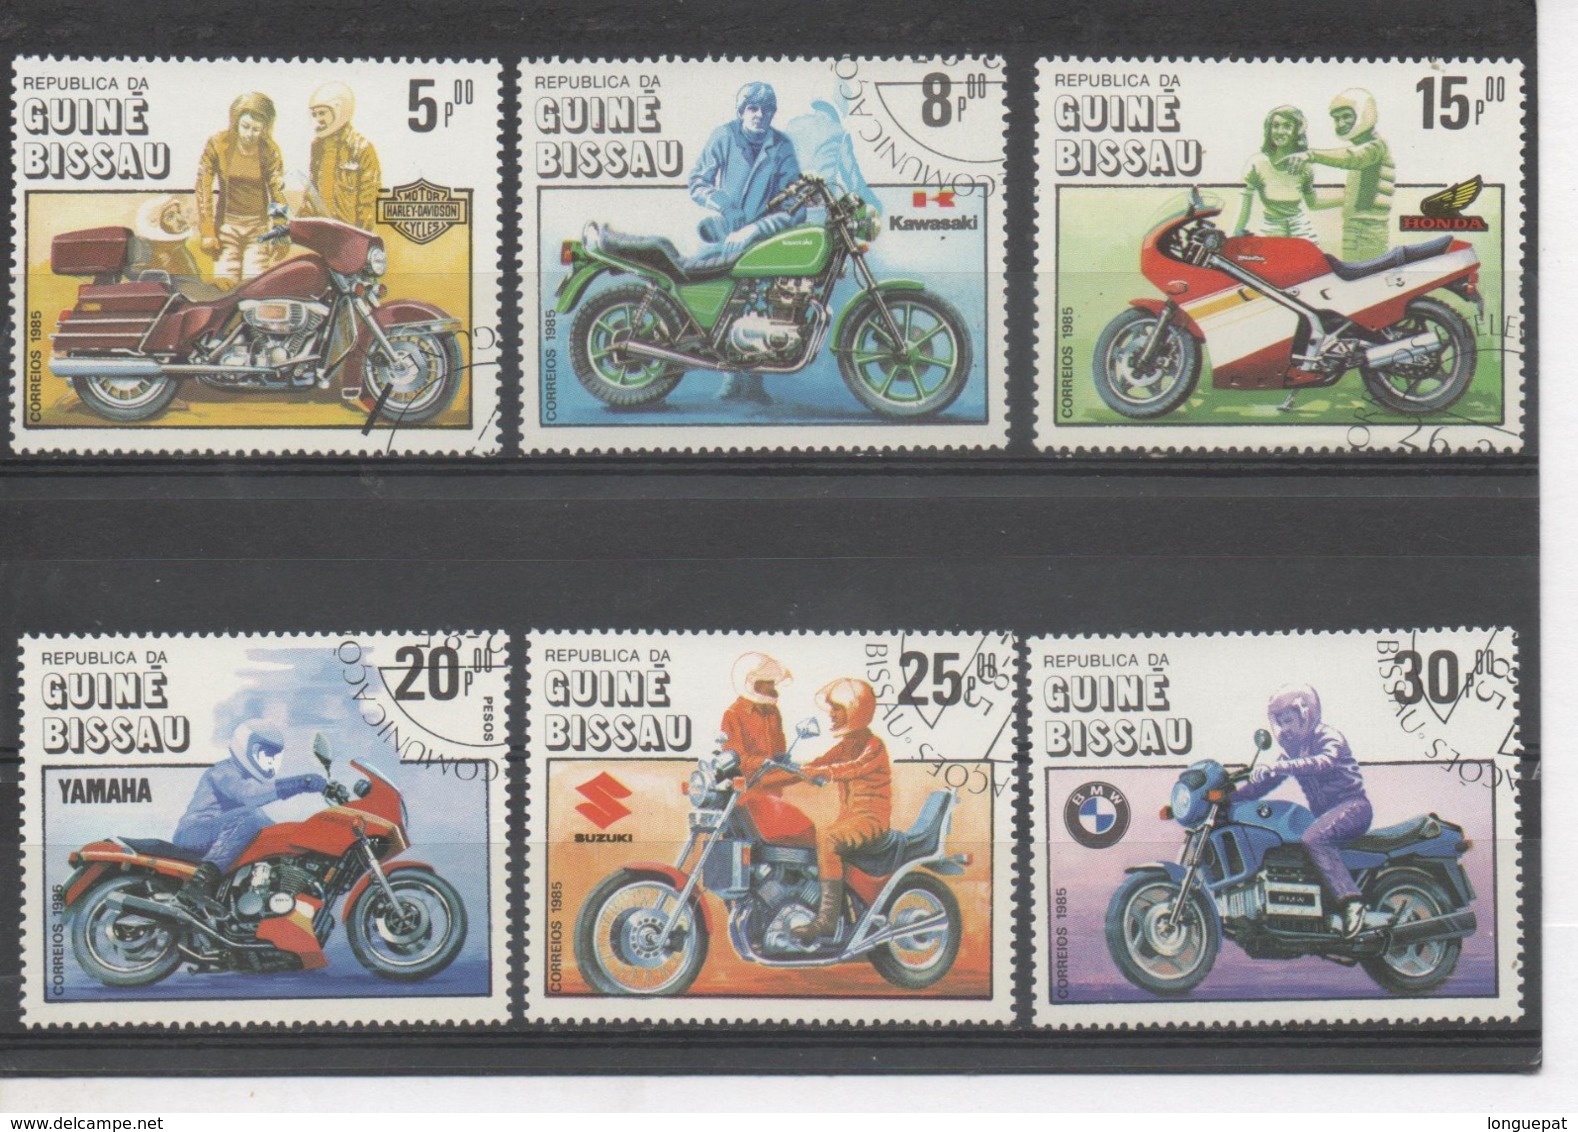 GUINEE-BISSAU - Motocyclettes : Centenaire - Harley-Davidson, Kasawaki, Honda, Yamaha, Suzuki, BMW - Guinea-Bissau